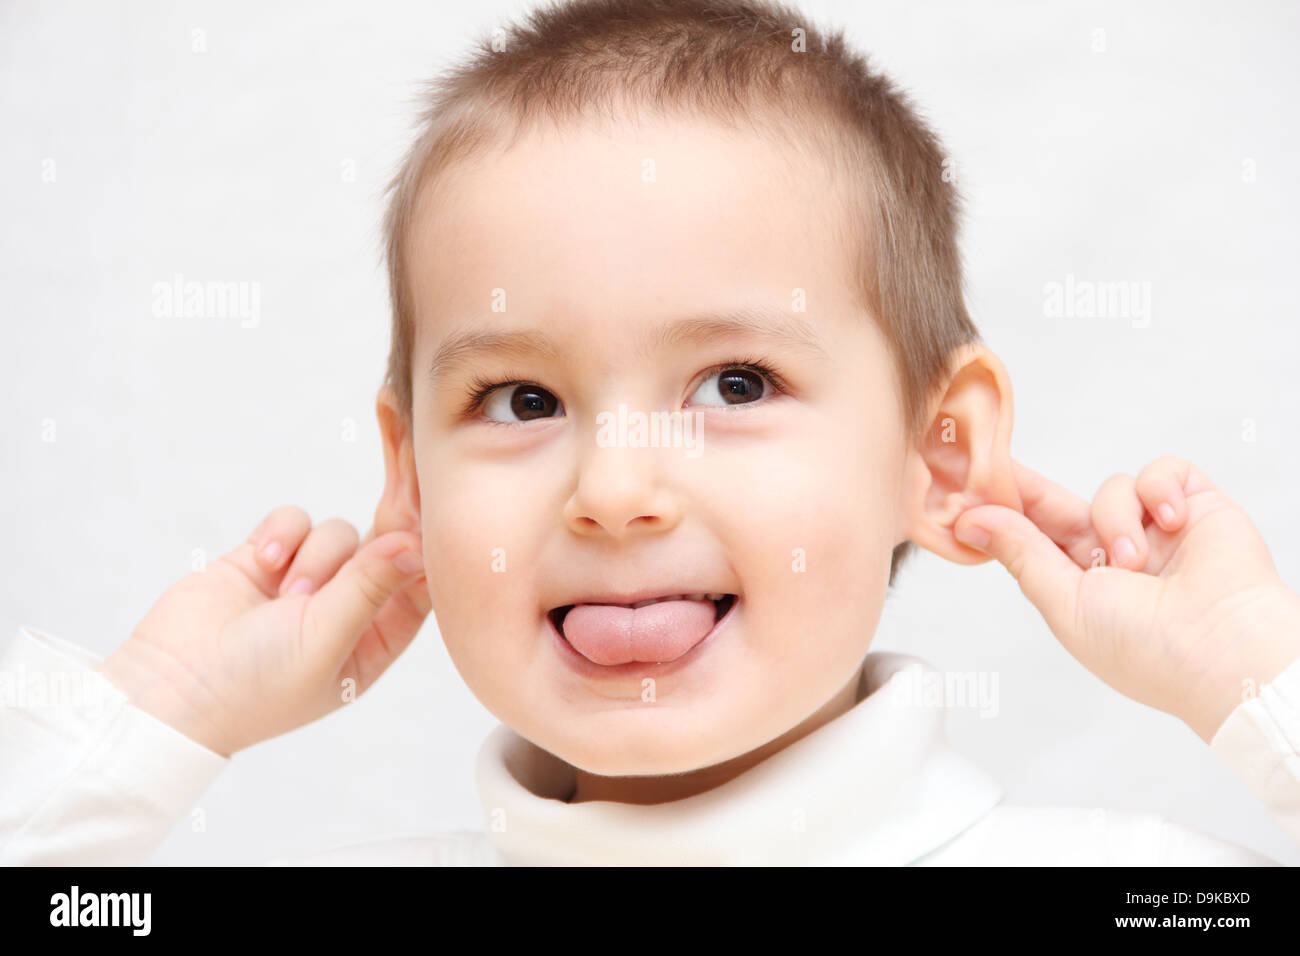 happy child showing tongue Stock Photo